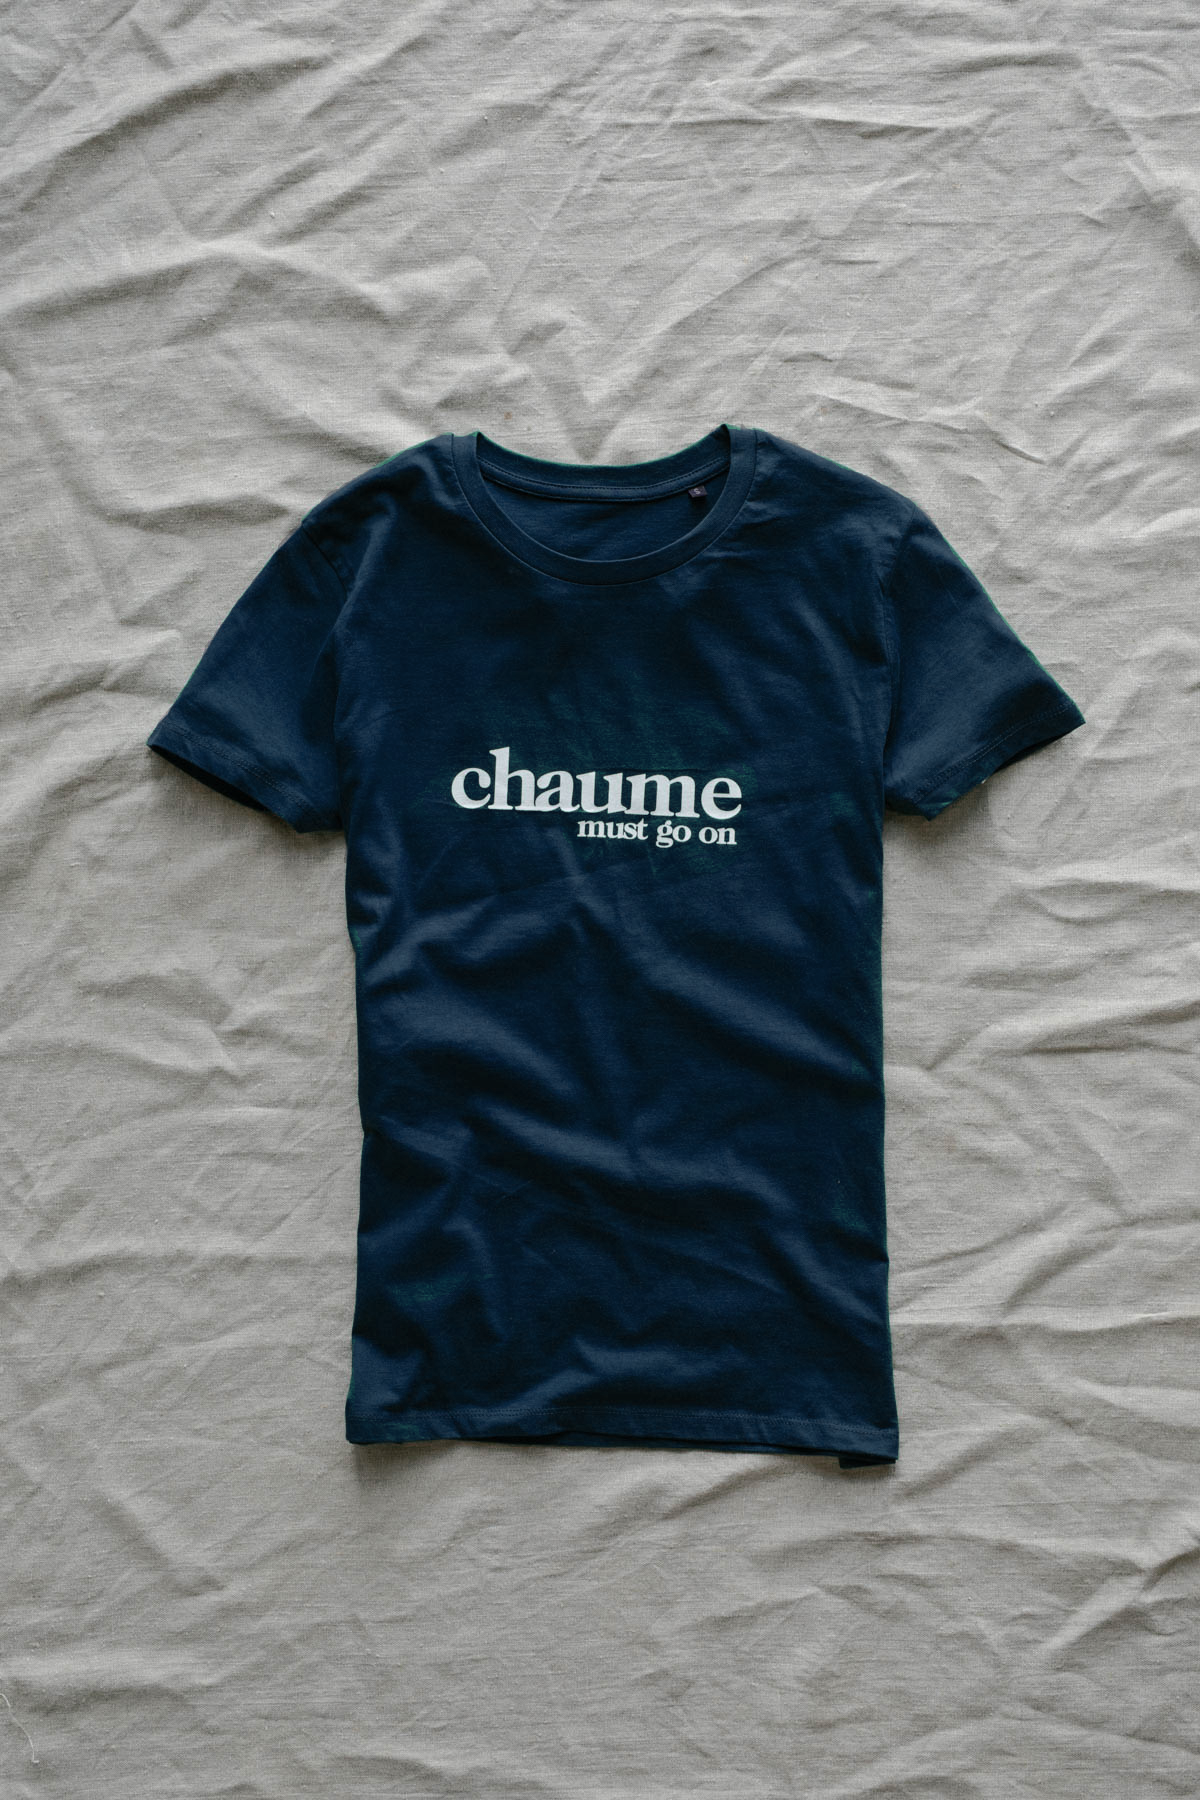 Tee shirt Marine - "Chaume must go on"